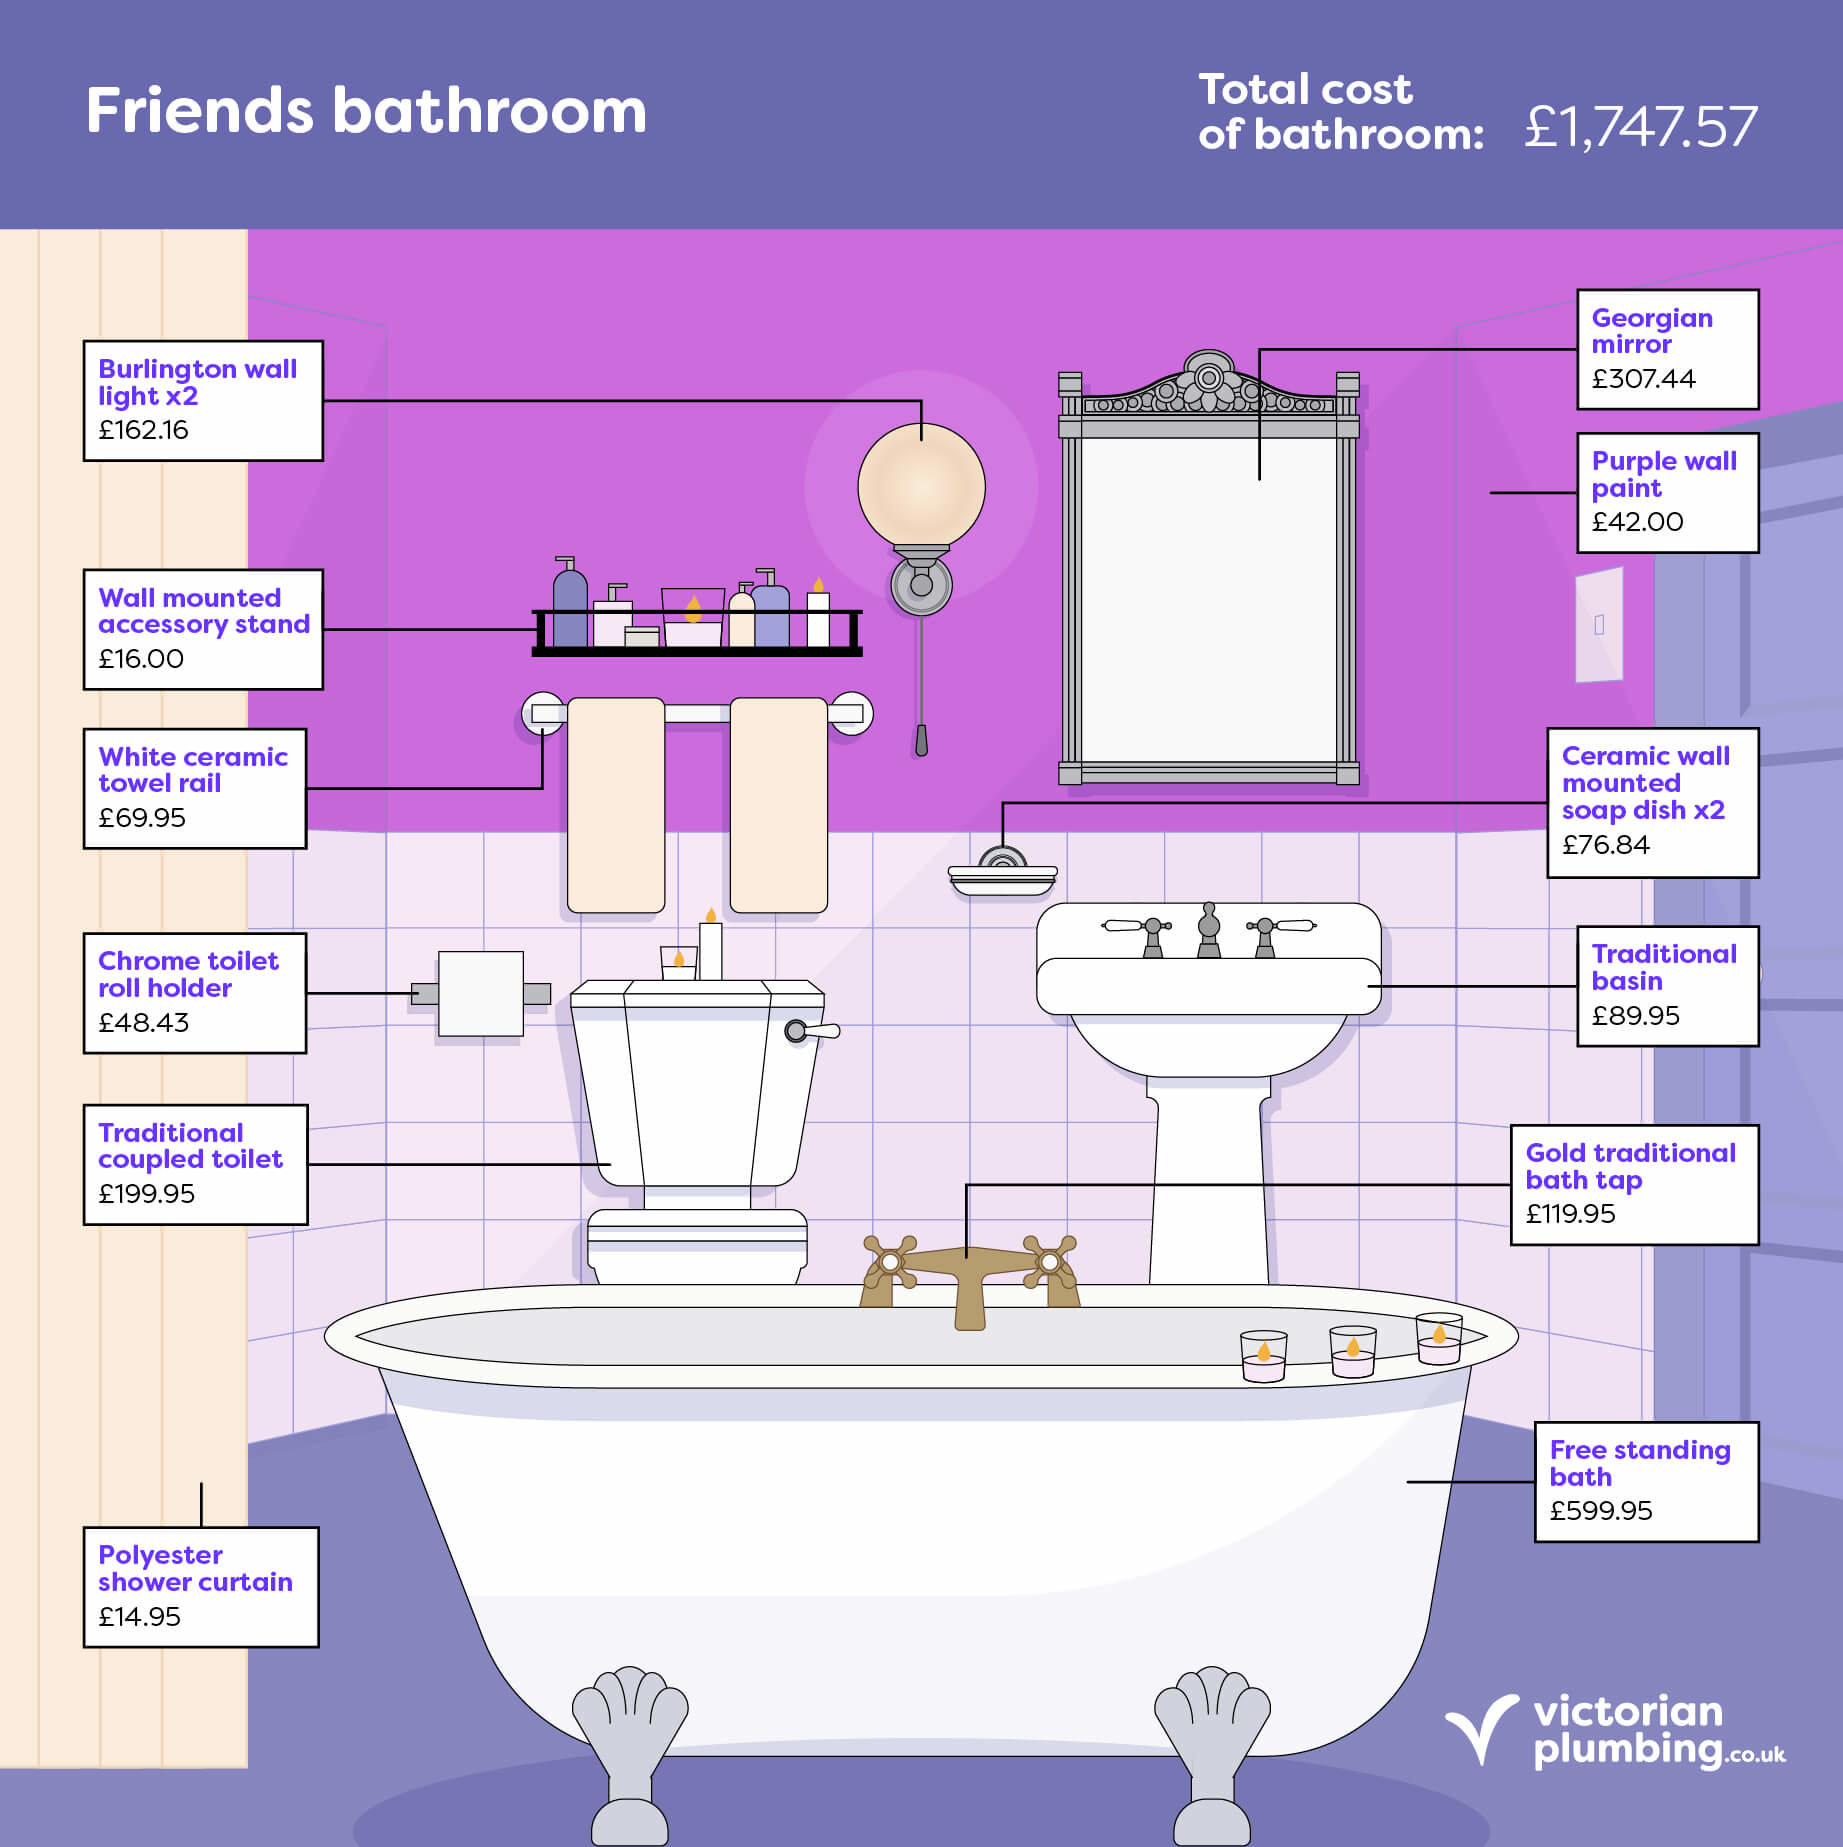 Fictional Bathroom: Friends